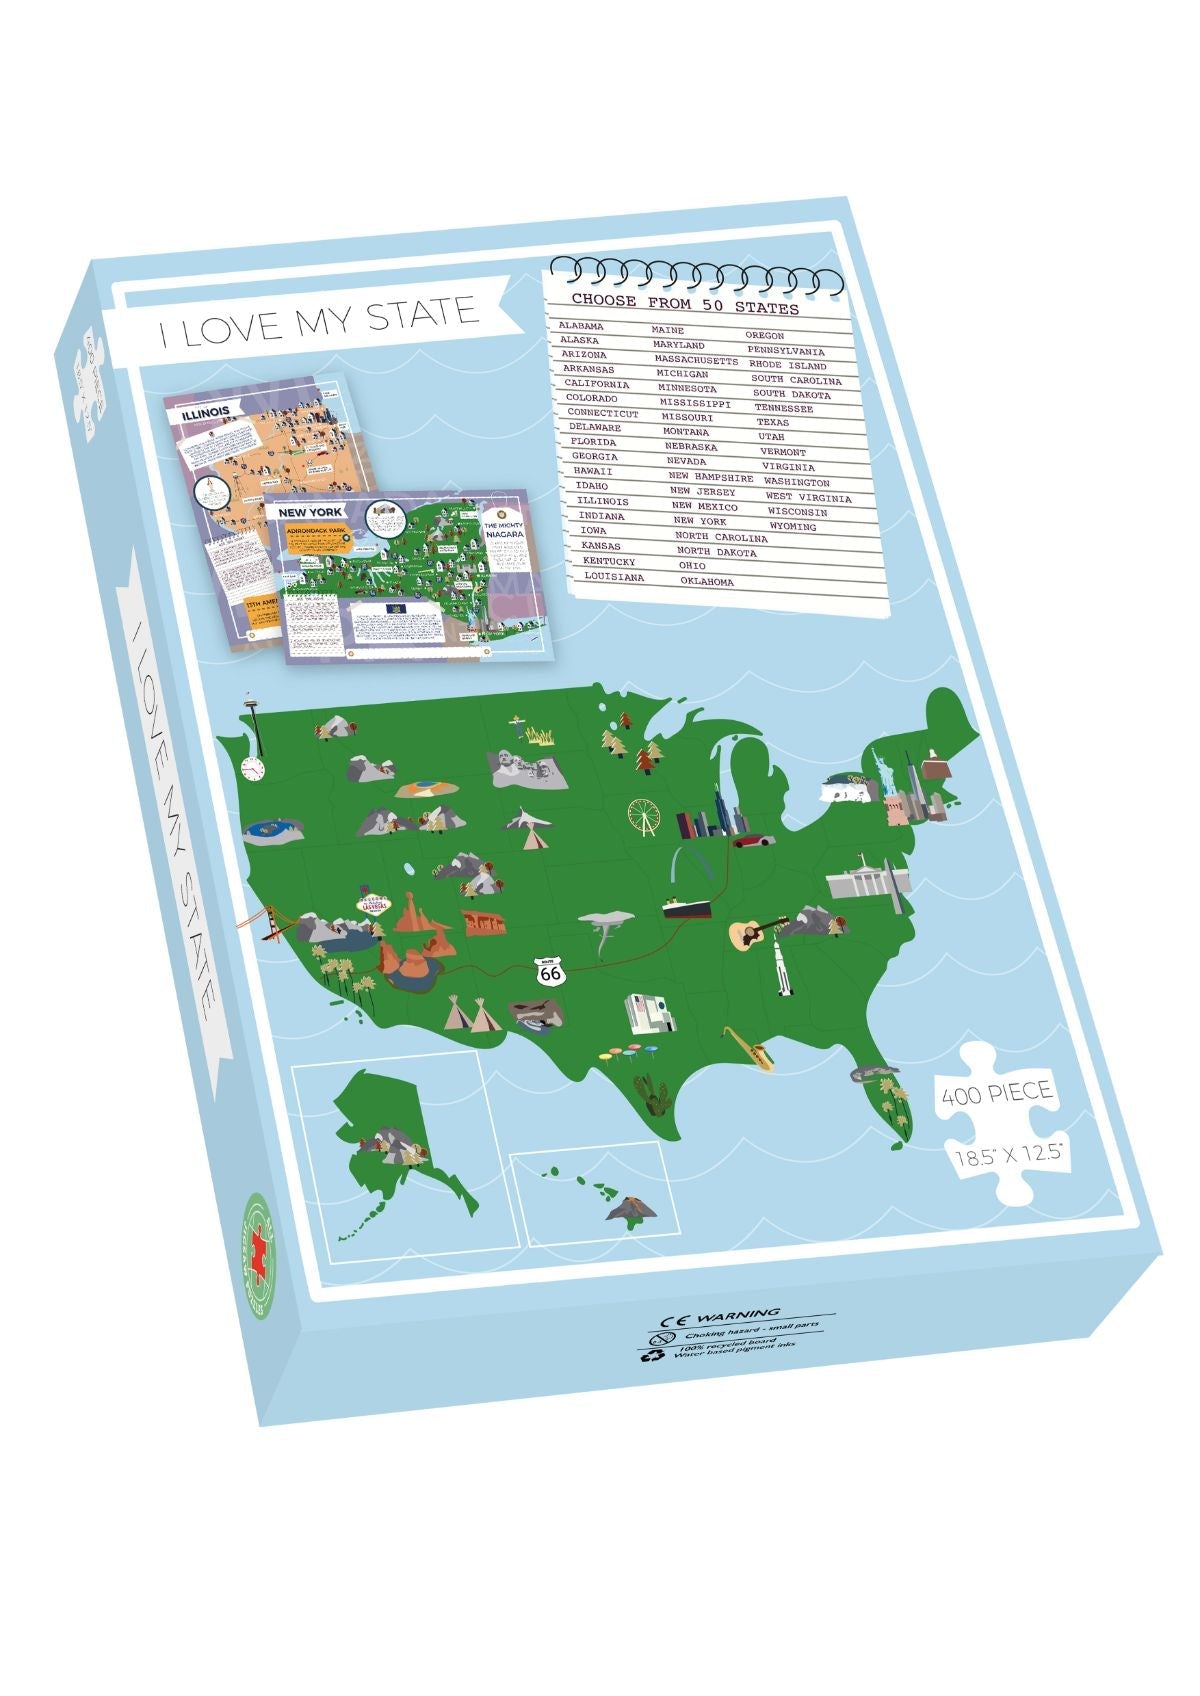 South Carolina - I Love My State 400 Piece Personalized Jigsaw Puzzle